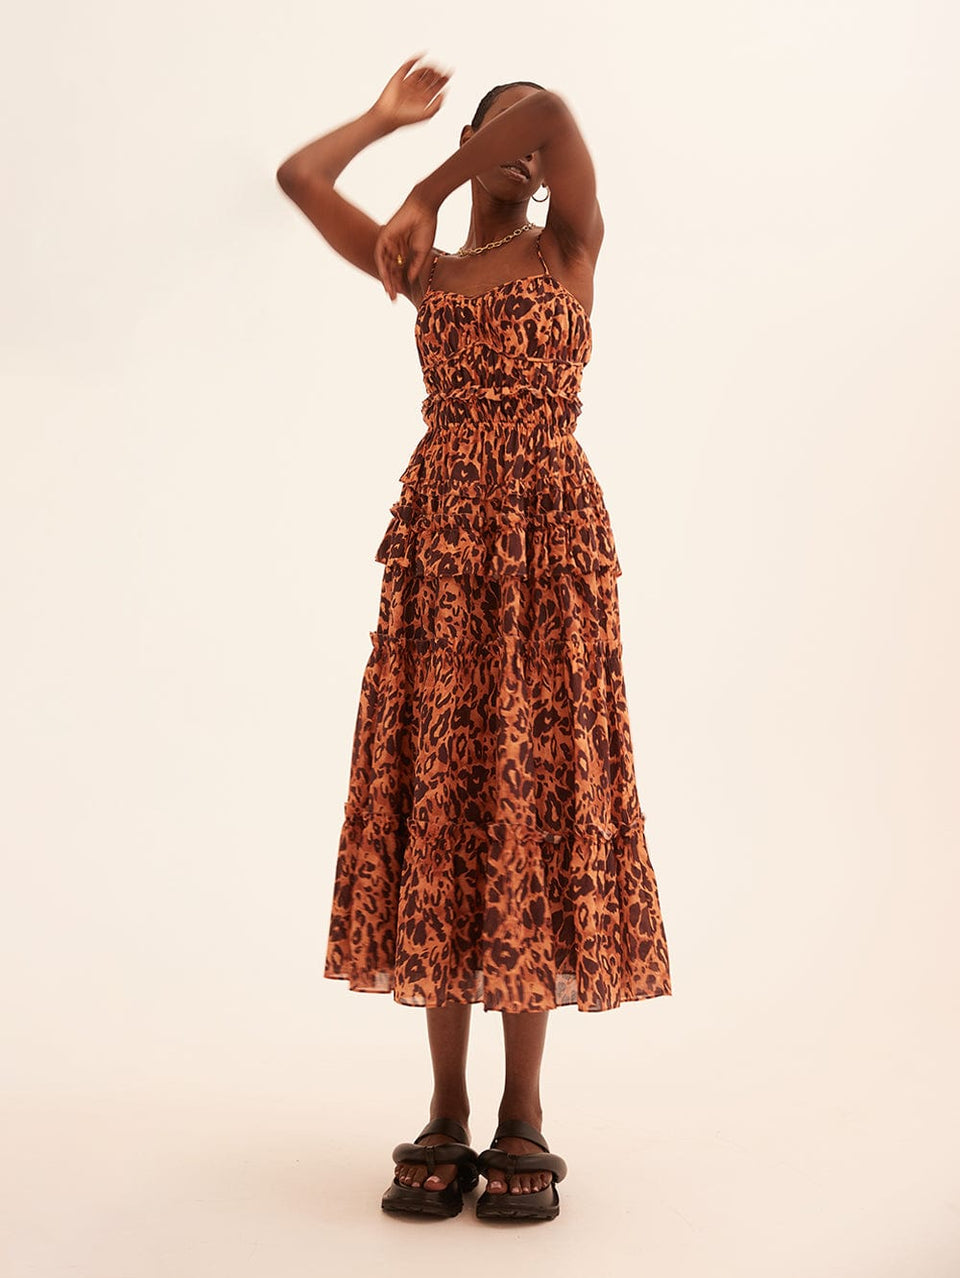 Madison Midi Dress KIVARI | Model wears orange and brown leopard midi dress campaign